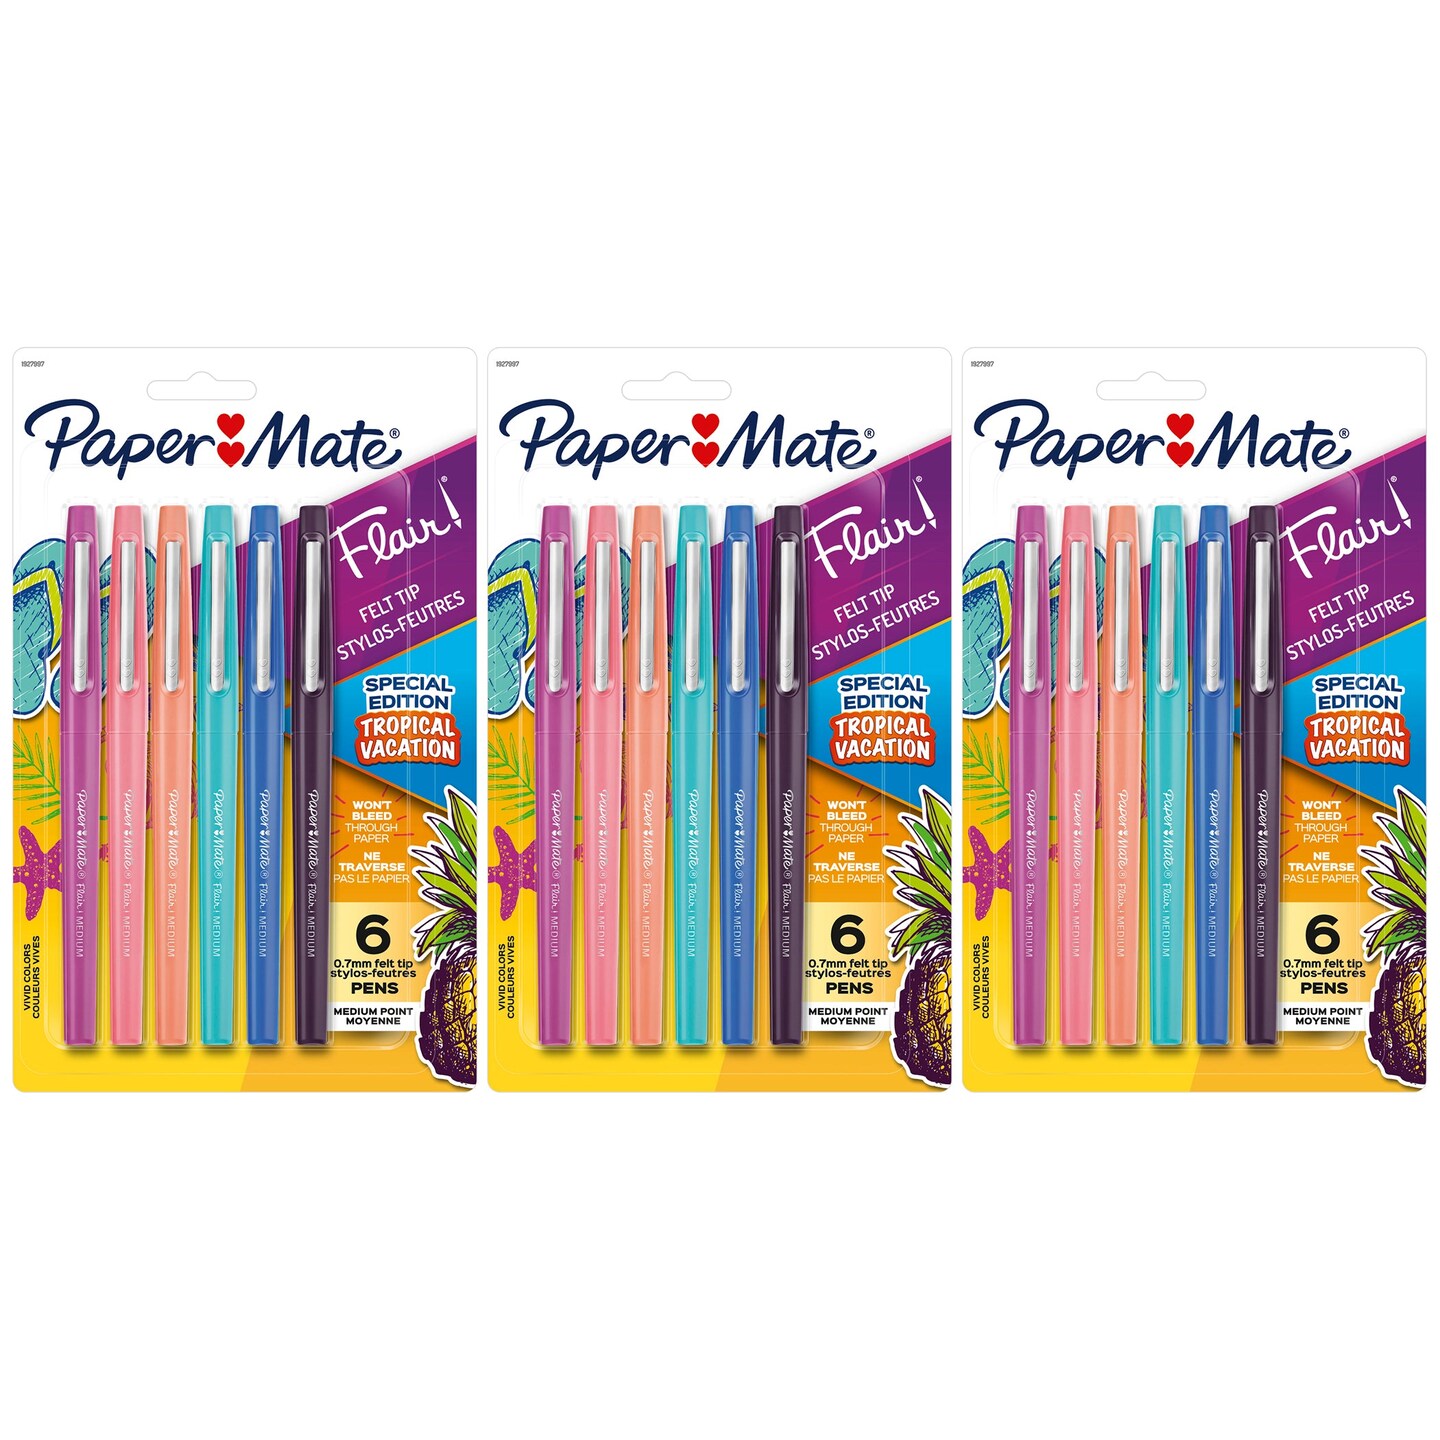 Paper Mate Flair Candy Pop Felt Tip Markers Medium Point 0.7mm